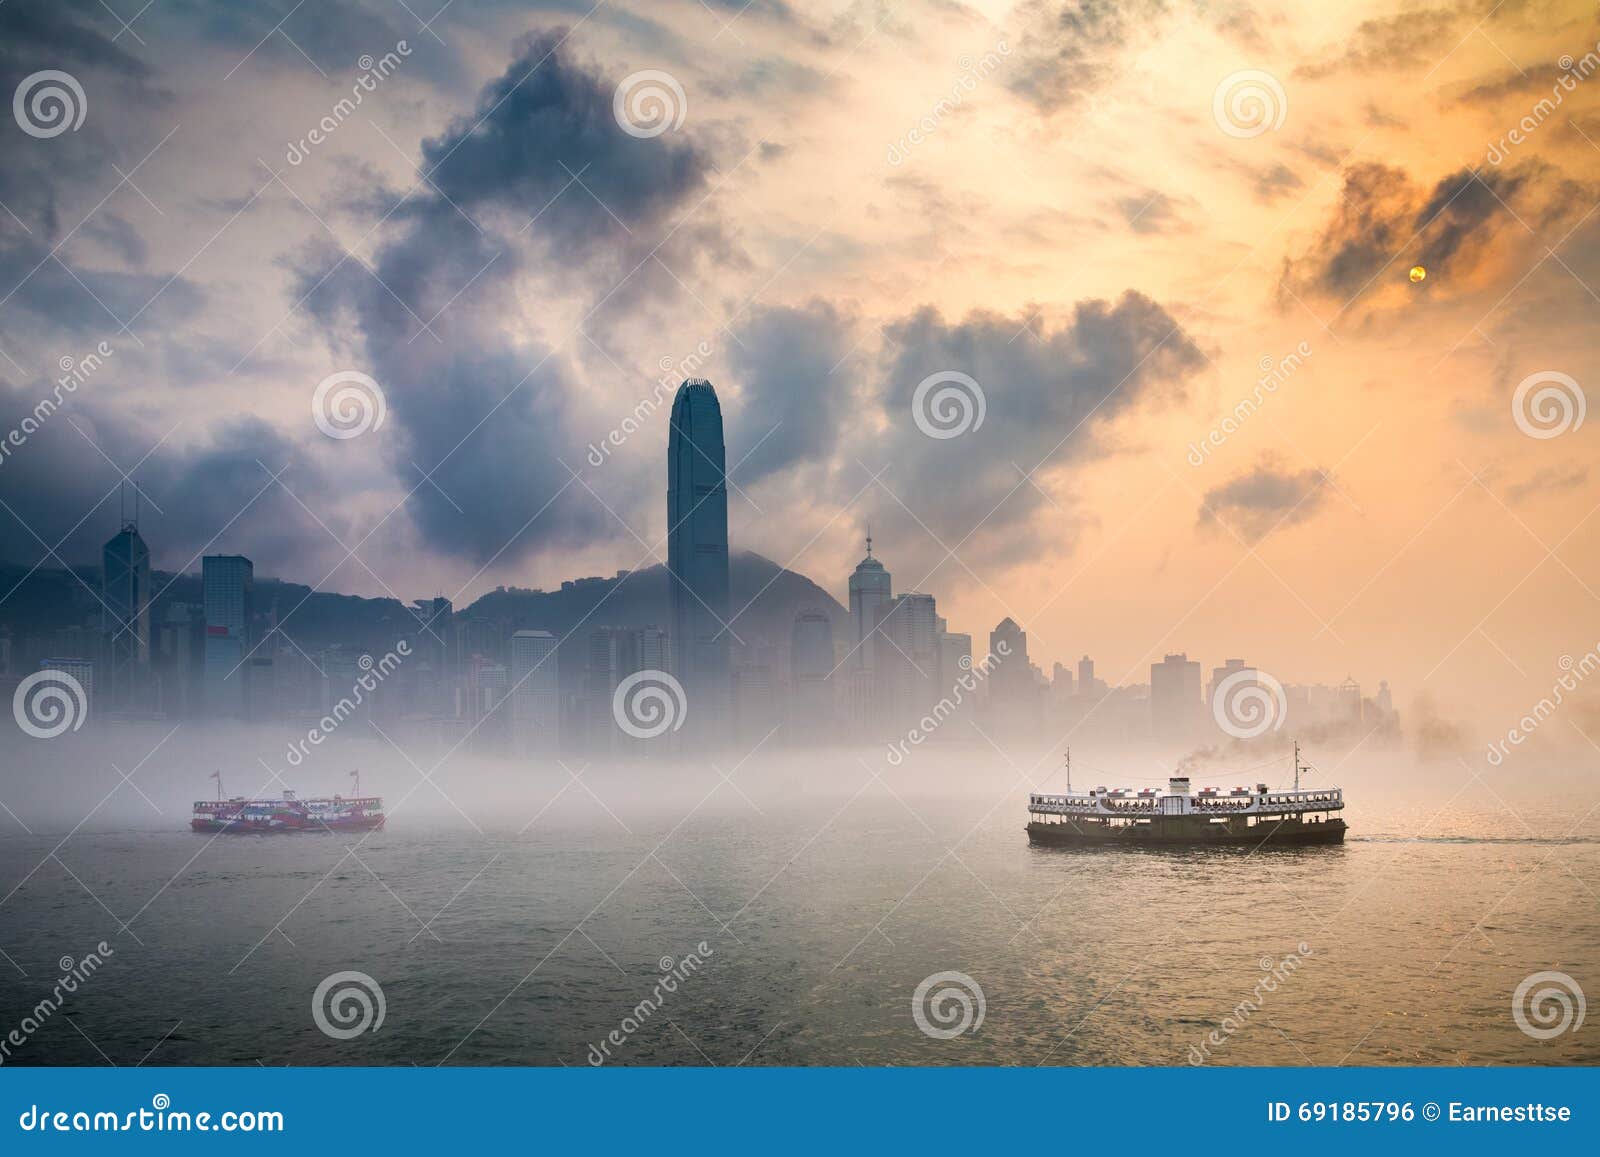 misty harbor - victoria harbor, hong kong